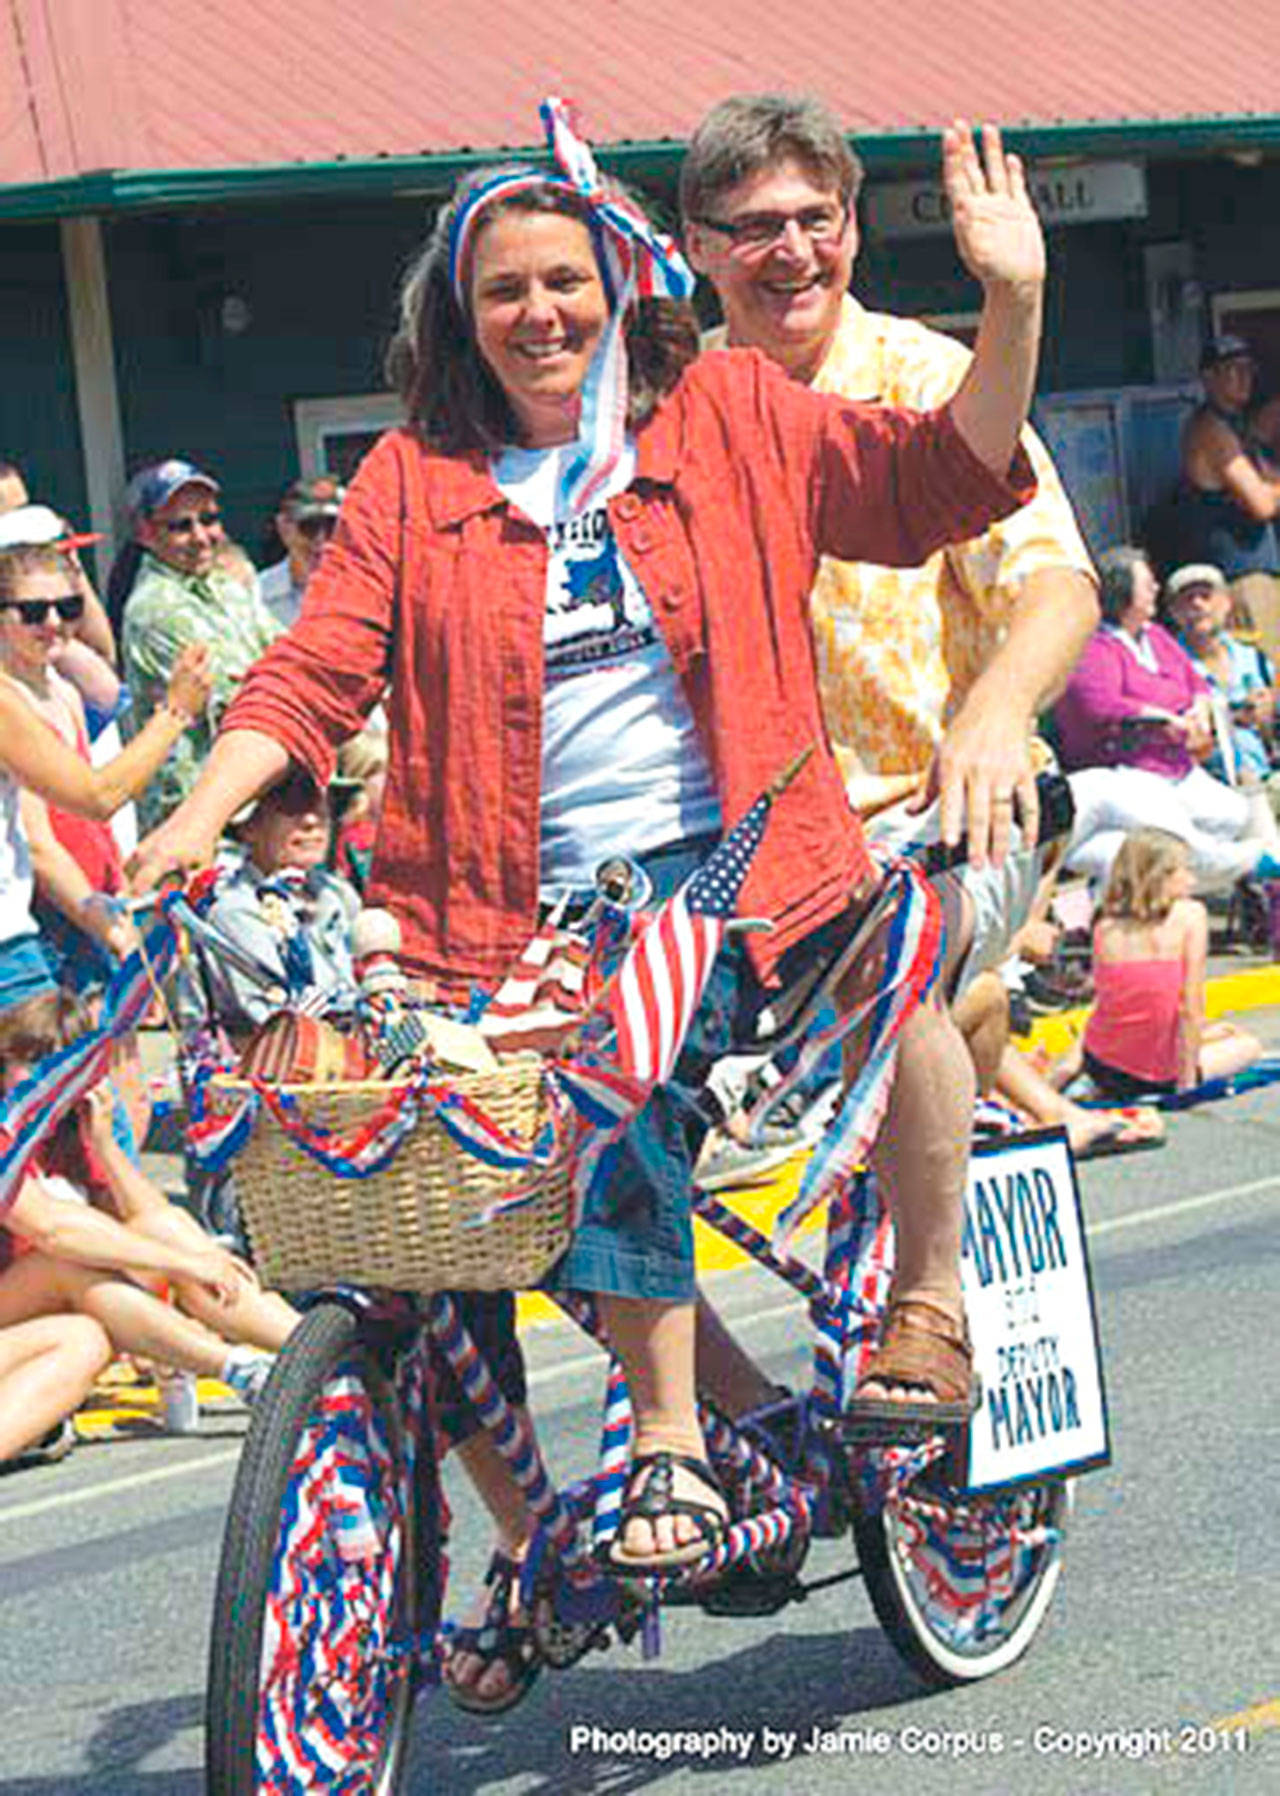 Lee Grumman and Jim Berger, Mayor and Deputy Mayor of Carnation, at the 2011 Fourth of July Parade. Courtesy Photo